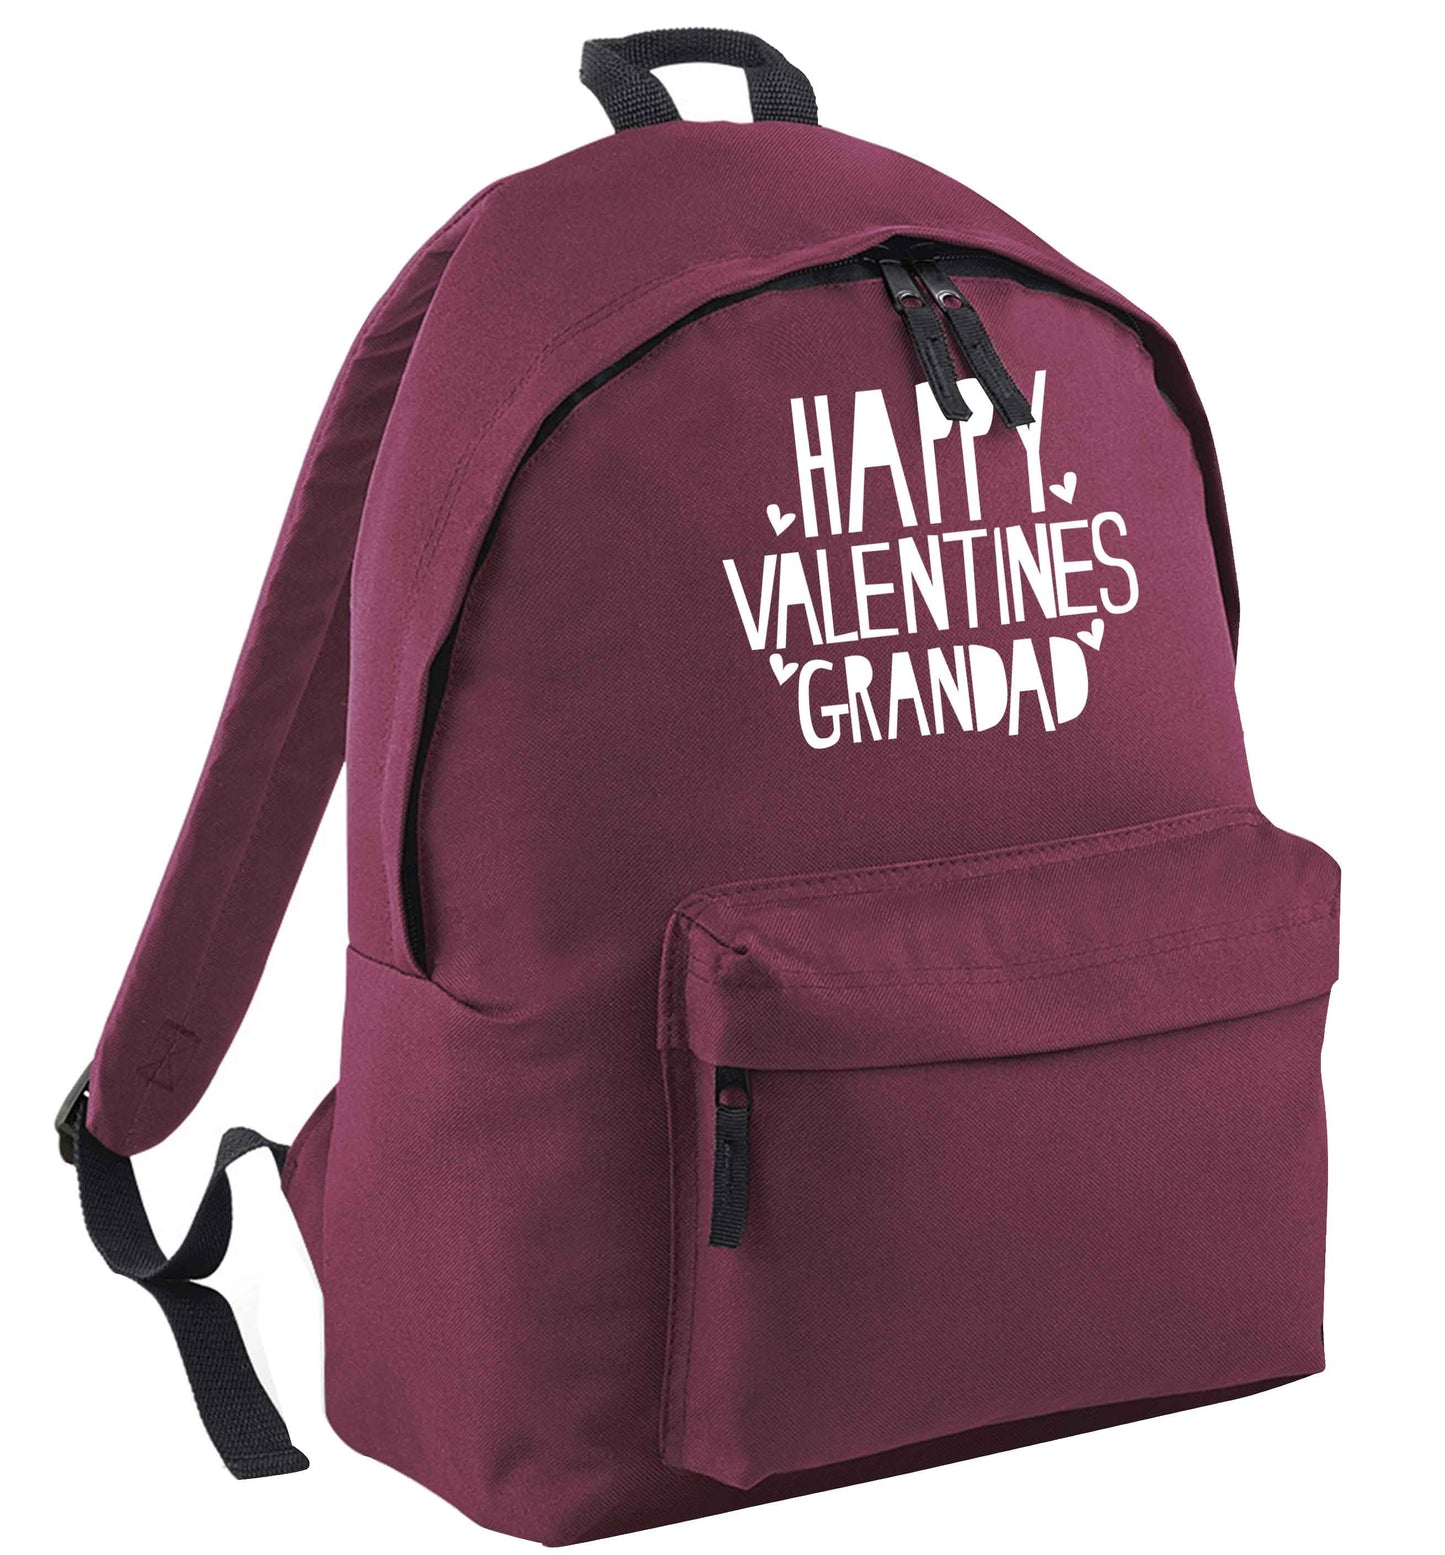 Happy valentines grandad black adults backpack